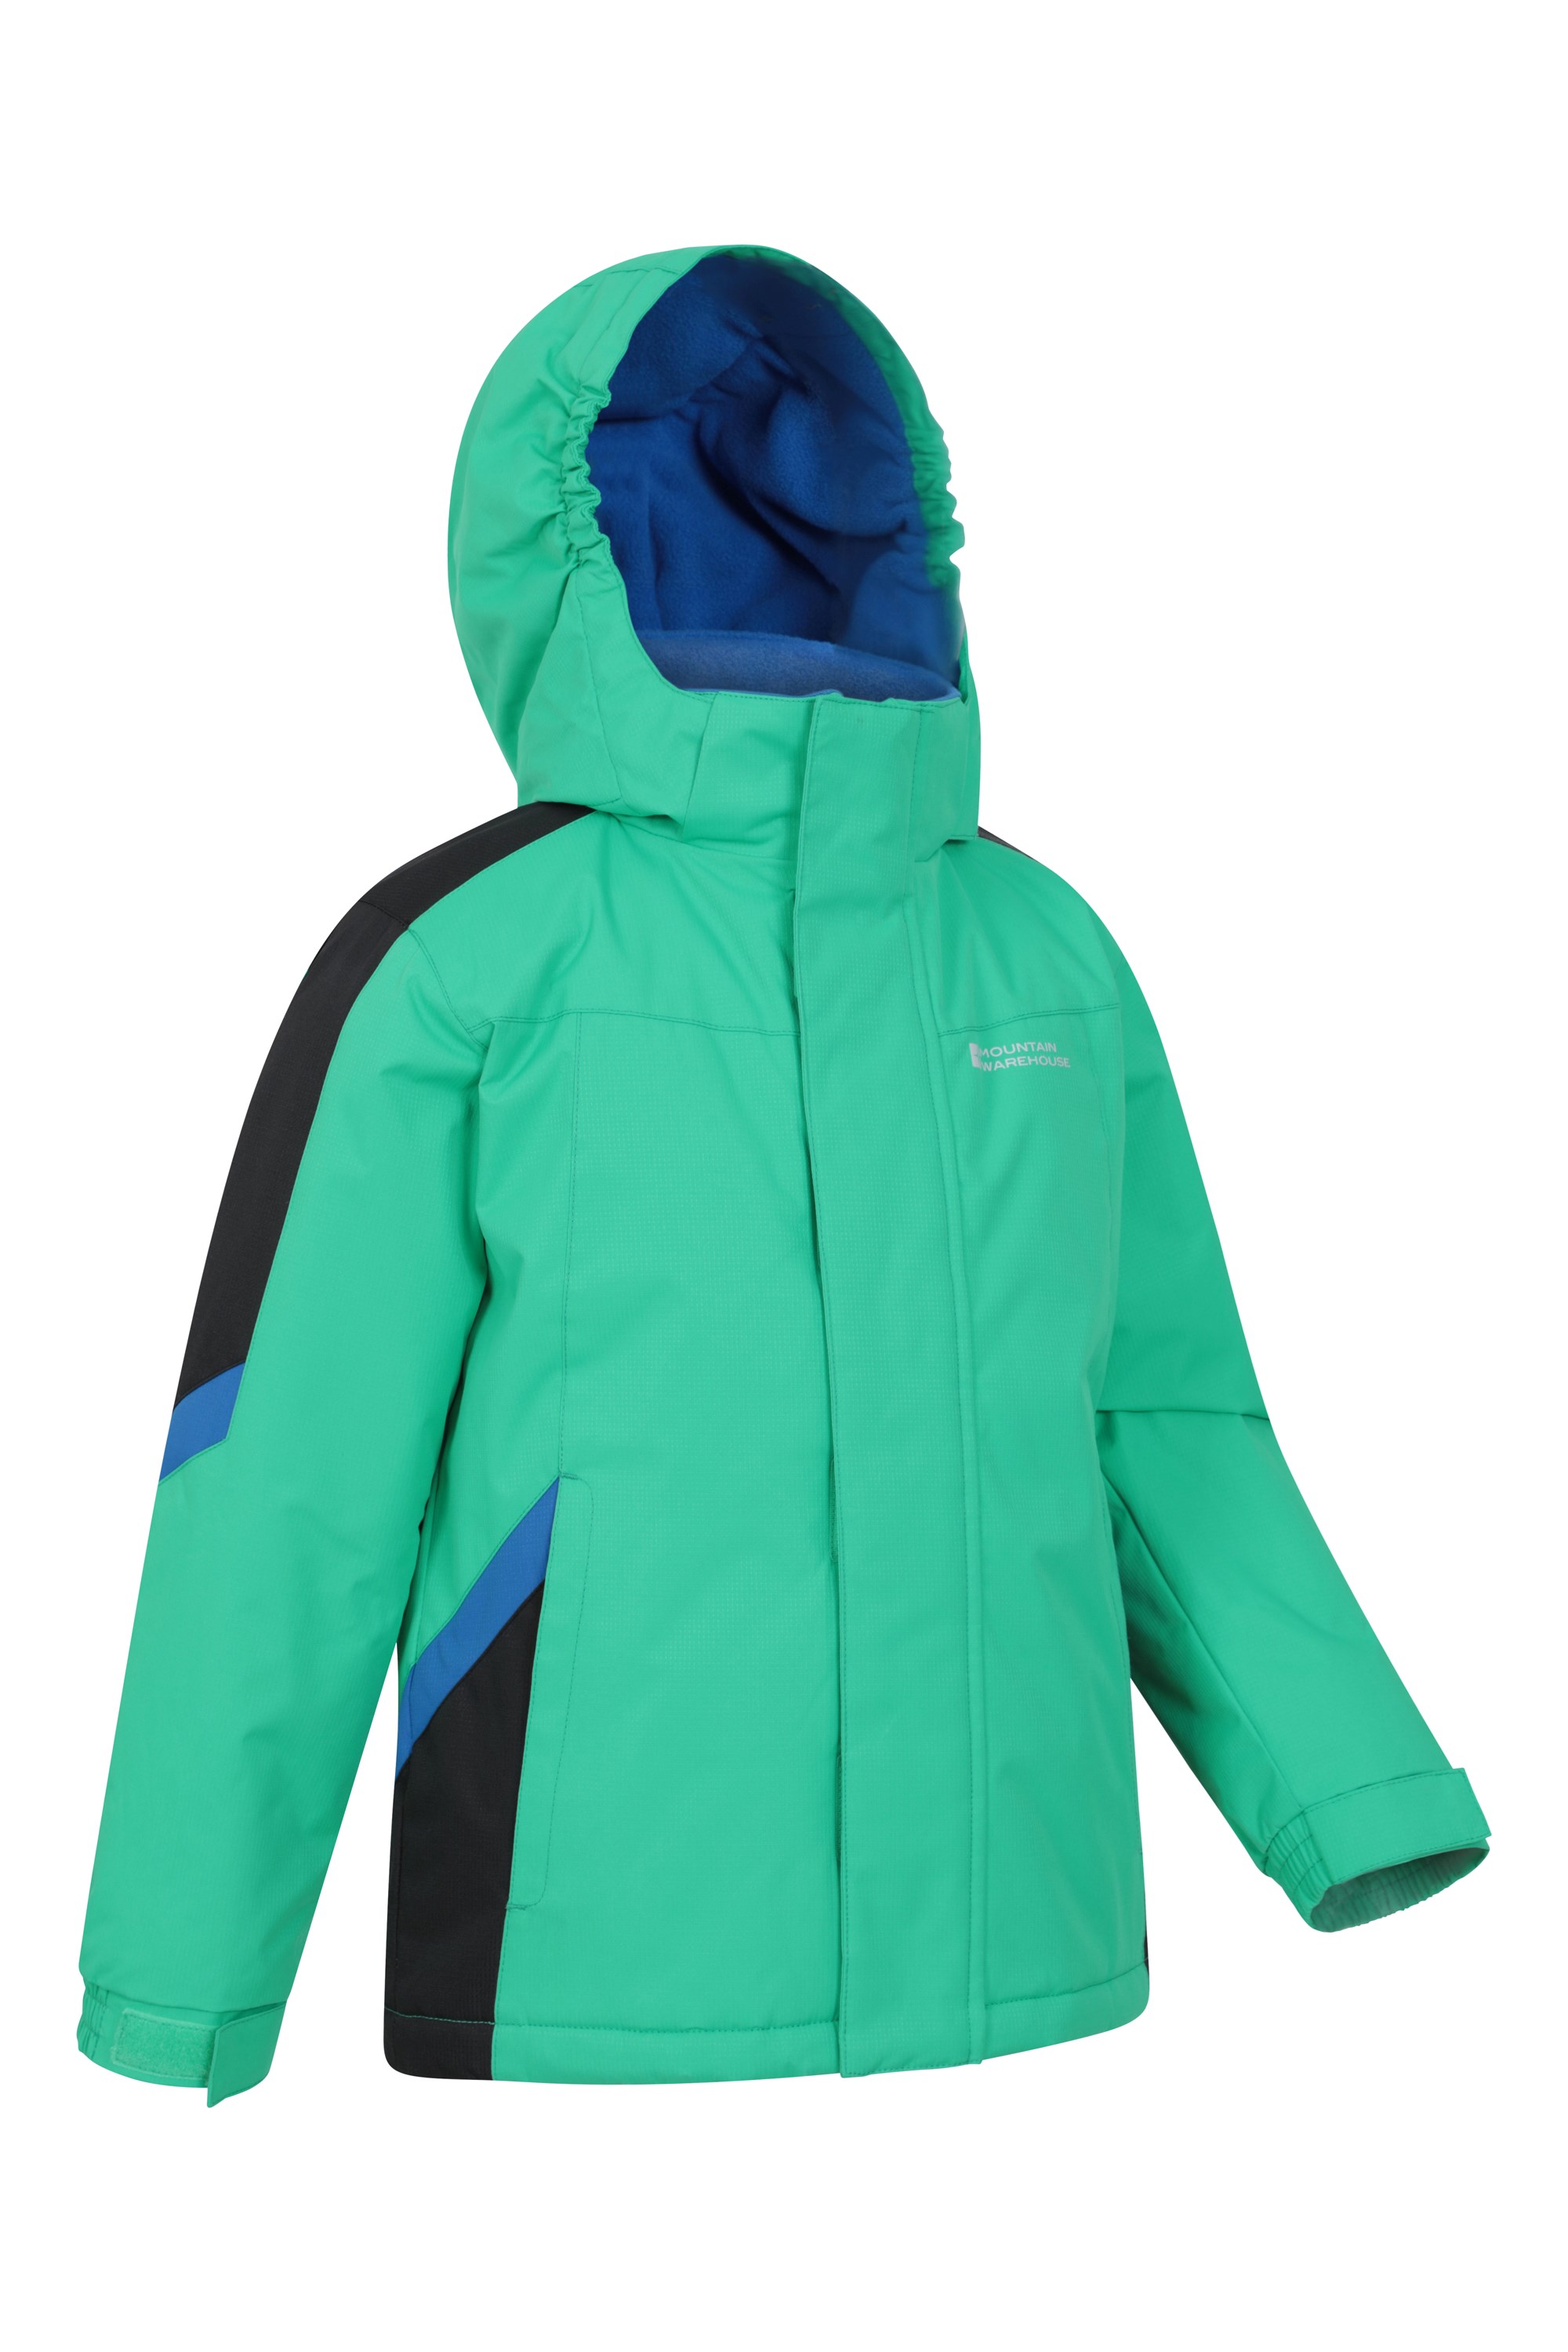 Mountain Warehouse Mountain Warehouse Snow Dust drop Printed Kids Ski Jacket coat age 5-6 years New 